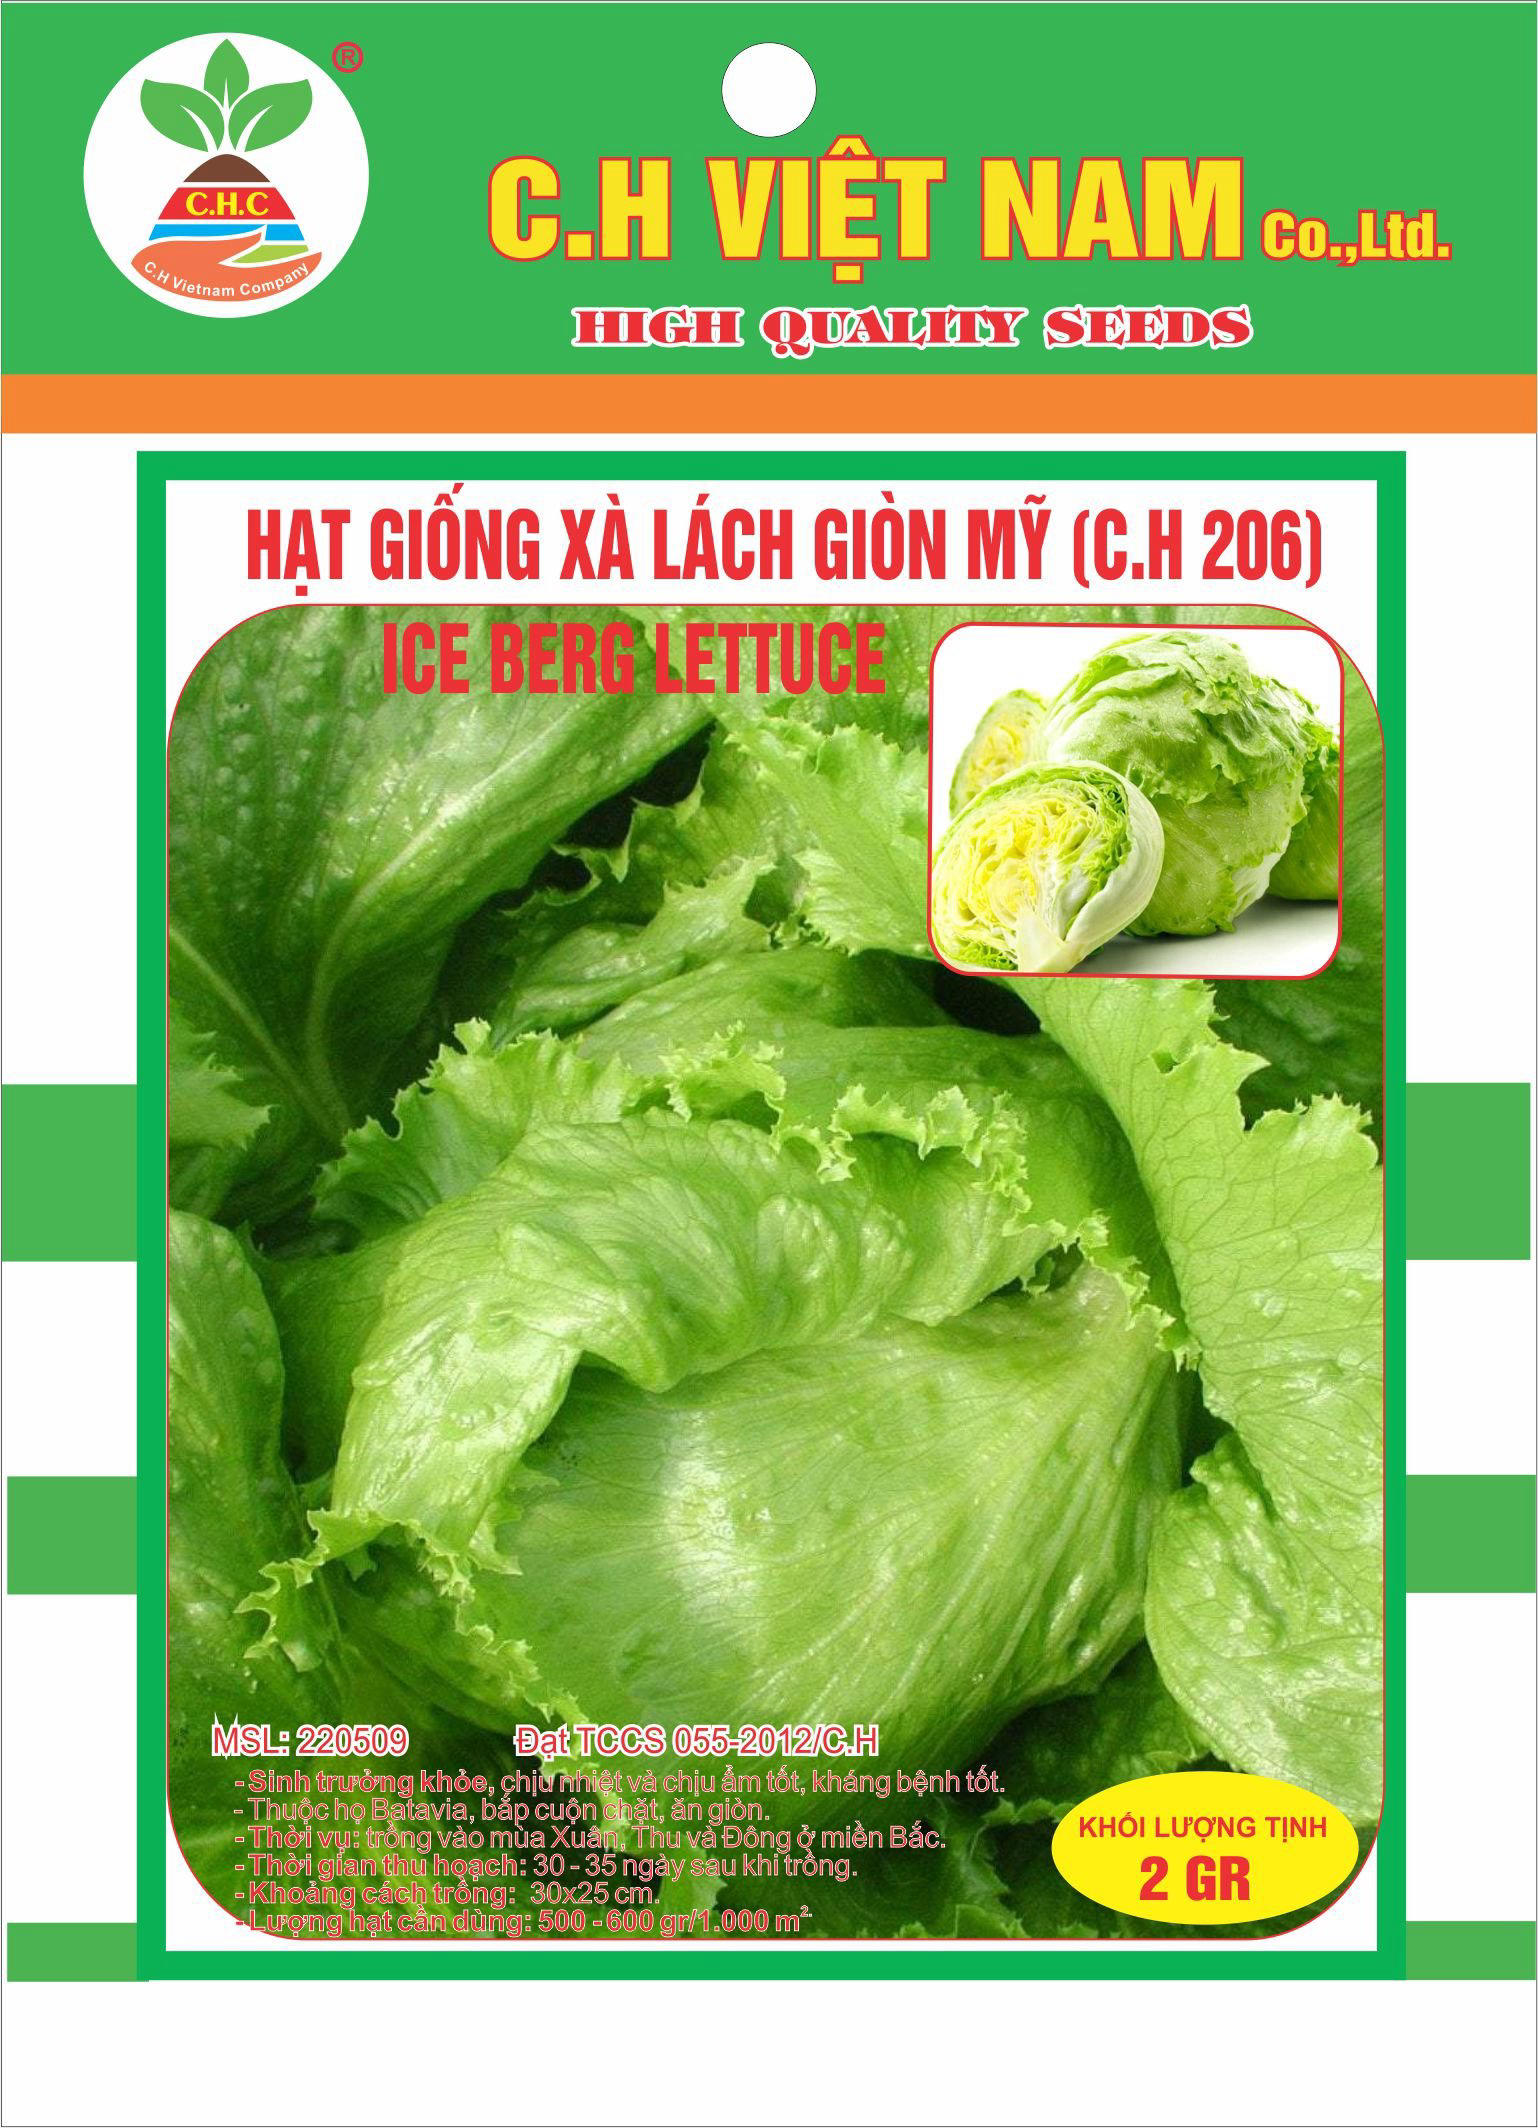 American crispy lettuce seeds